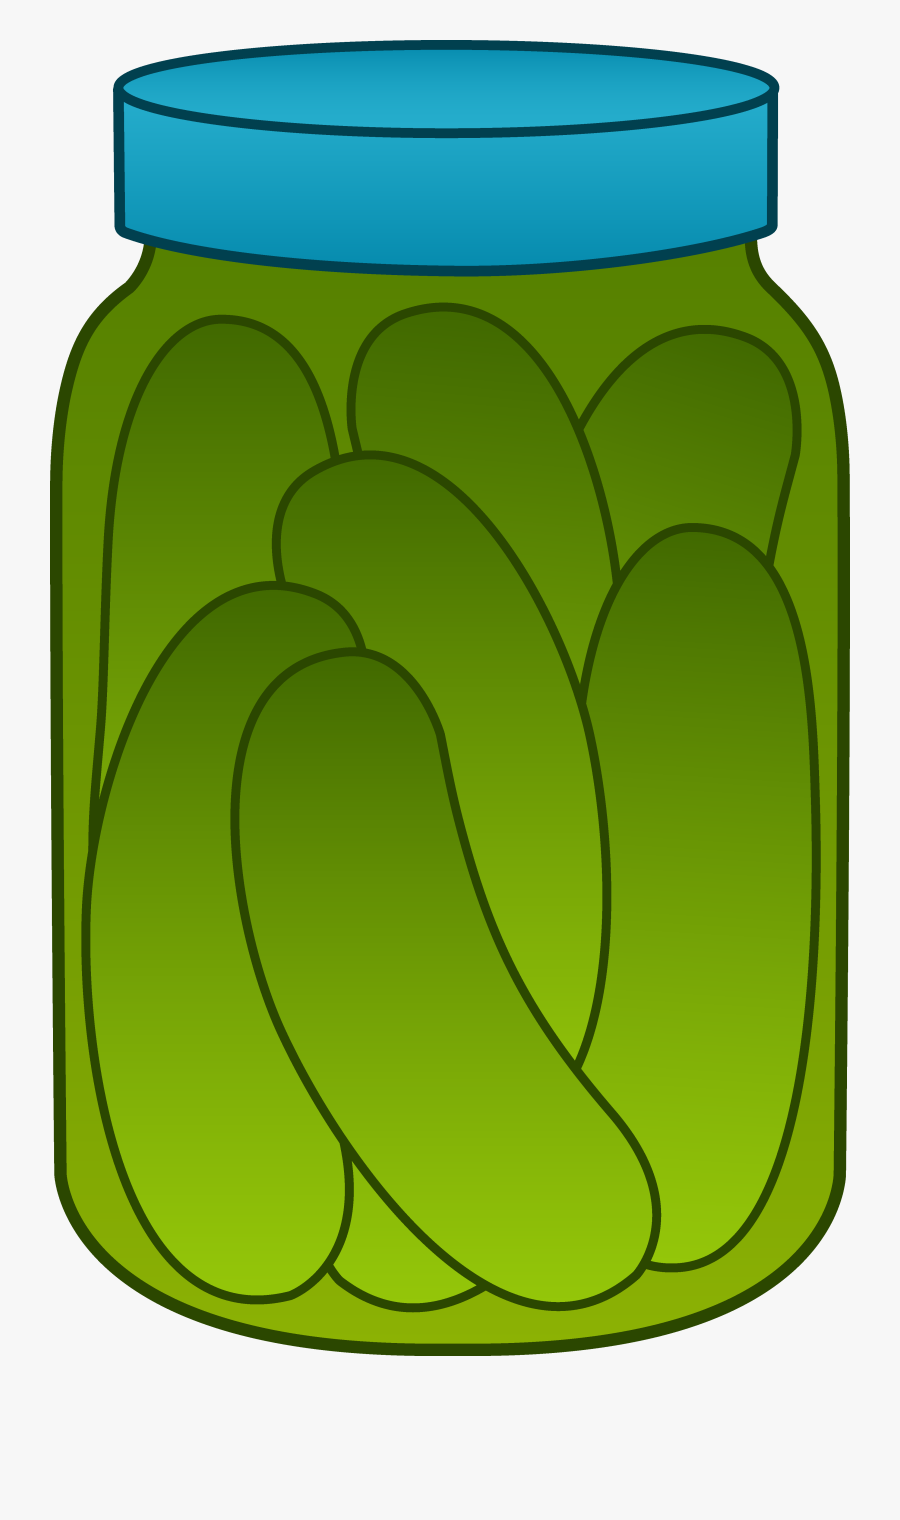 Jar Of Green Pickles - Pickles Clipart, Transparent Clipart